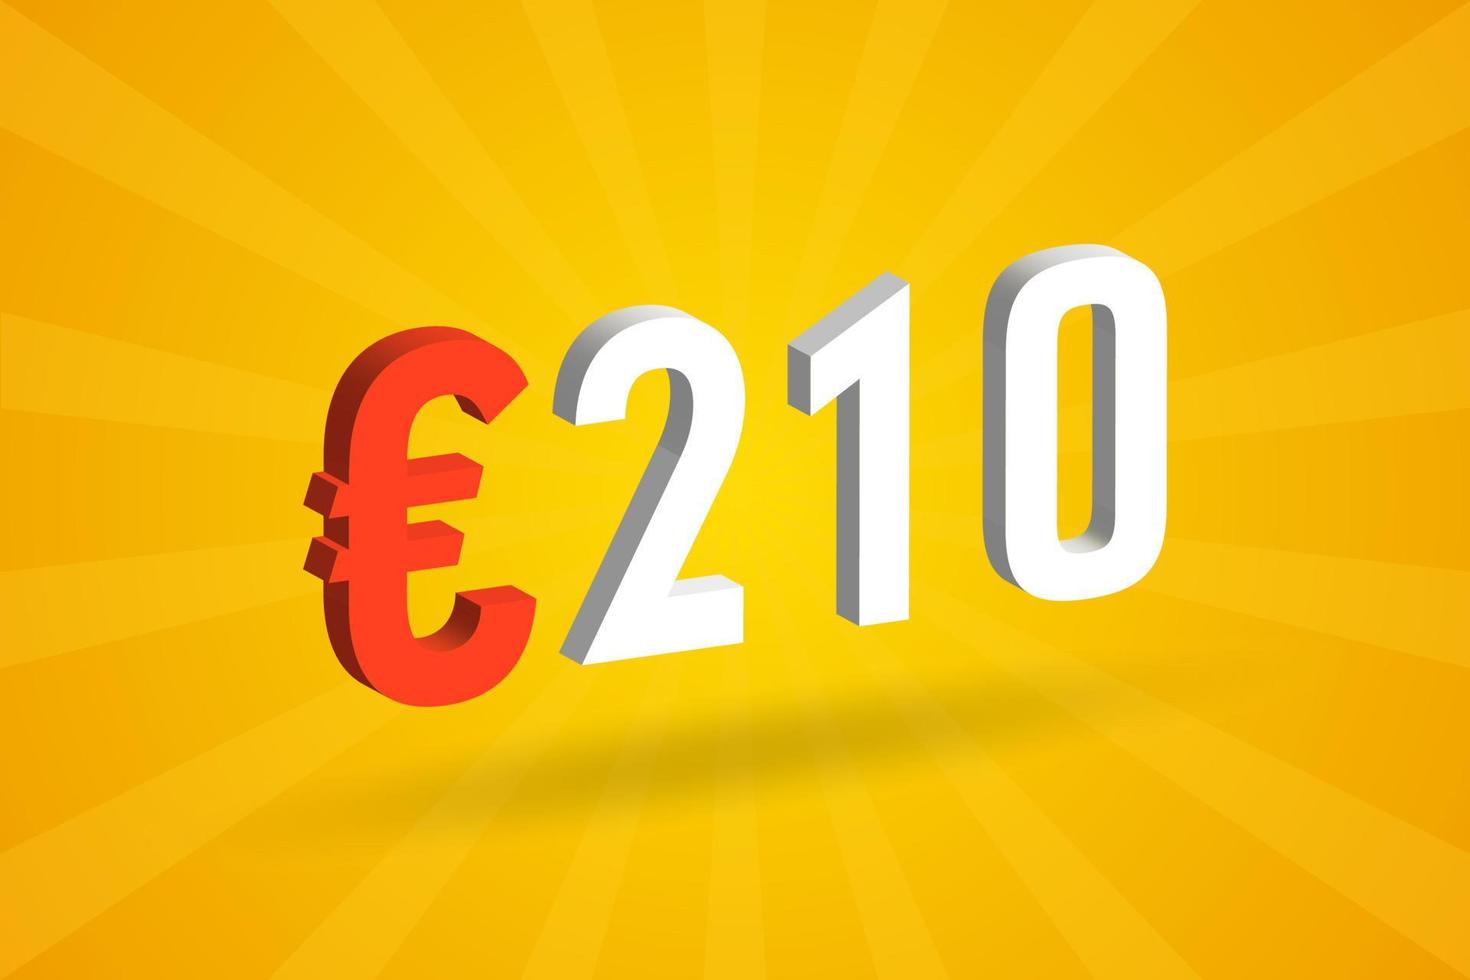 210 Euro Currency 3D vector text symbol. 3D 210 Euro European Union Money stock vector